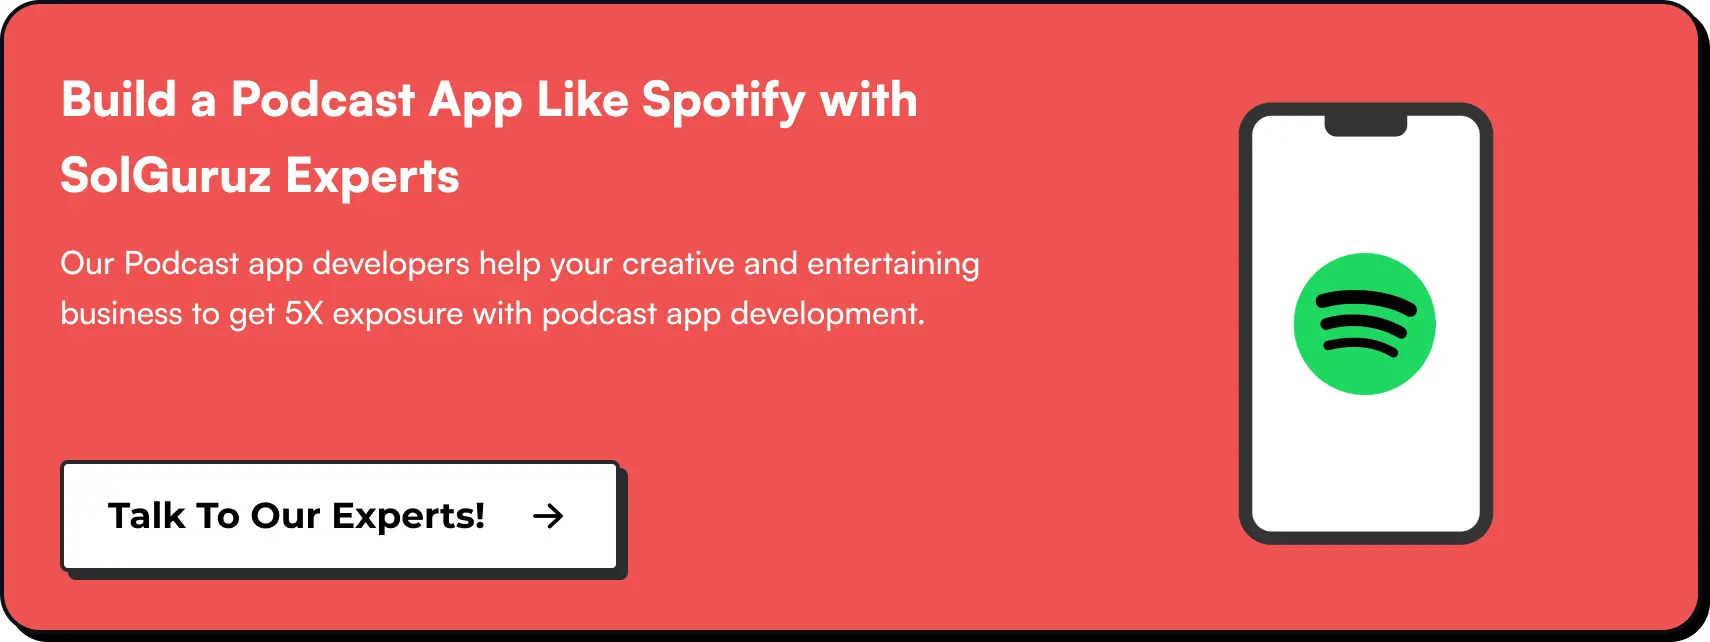 Build a Podcast App Like Spotify with SolGuruz Experts